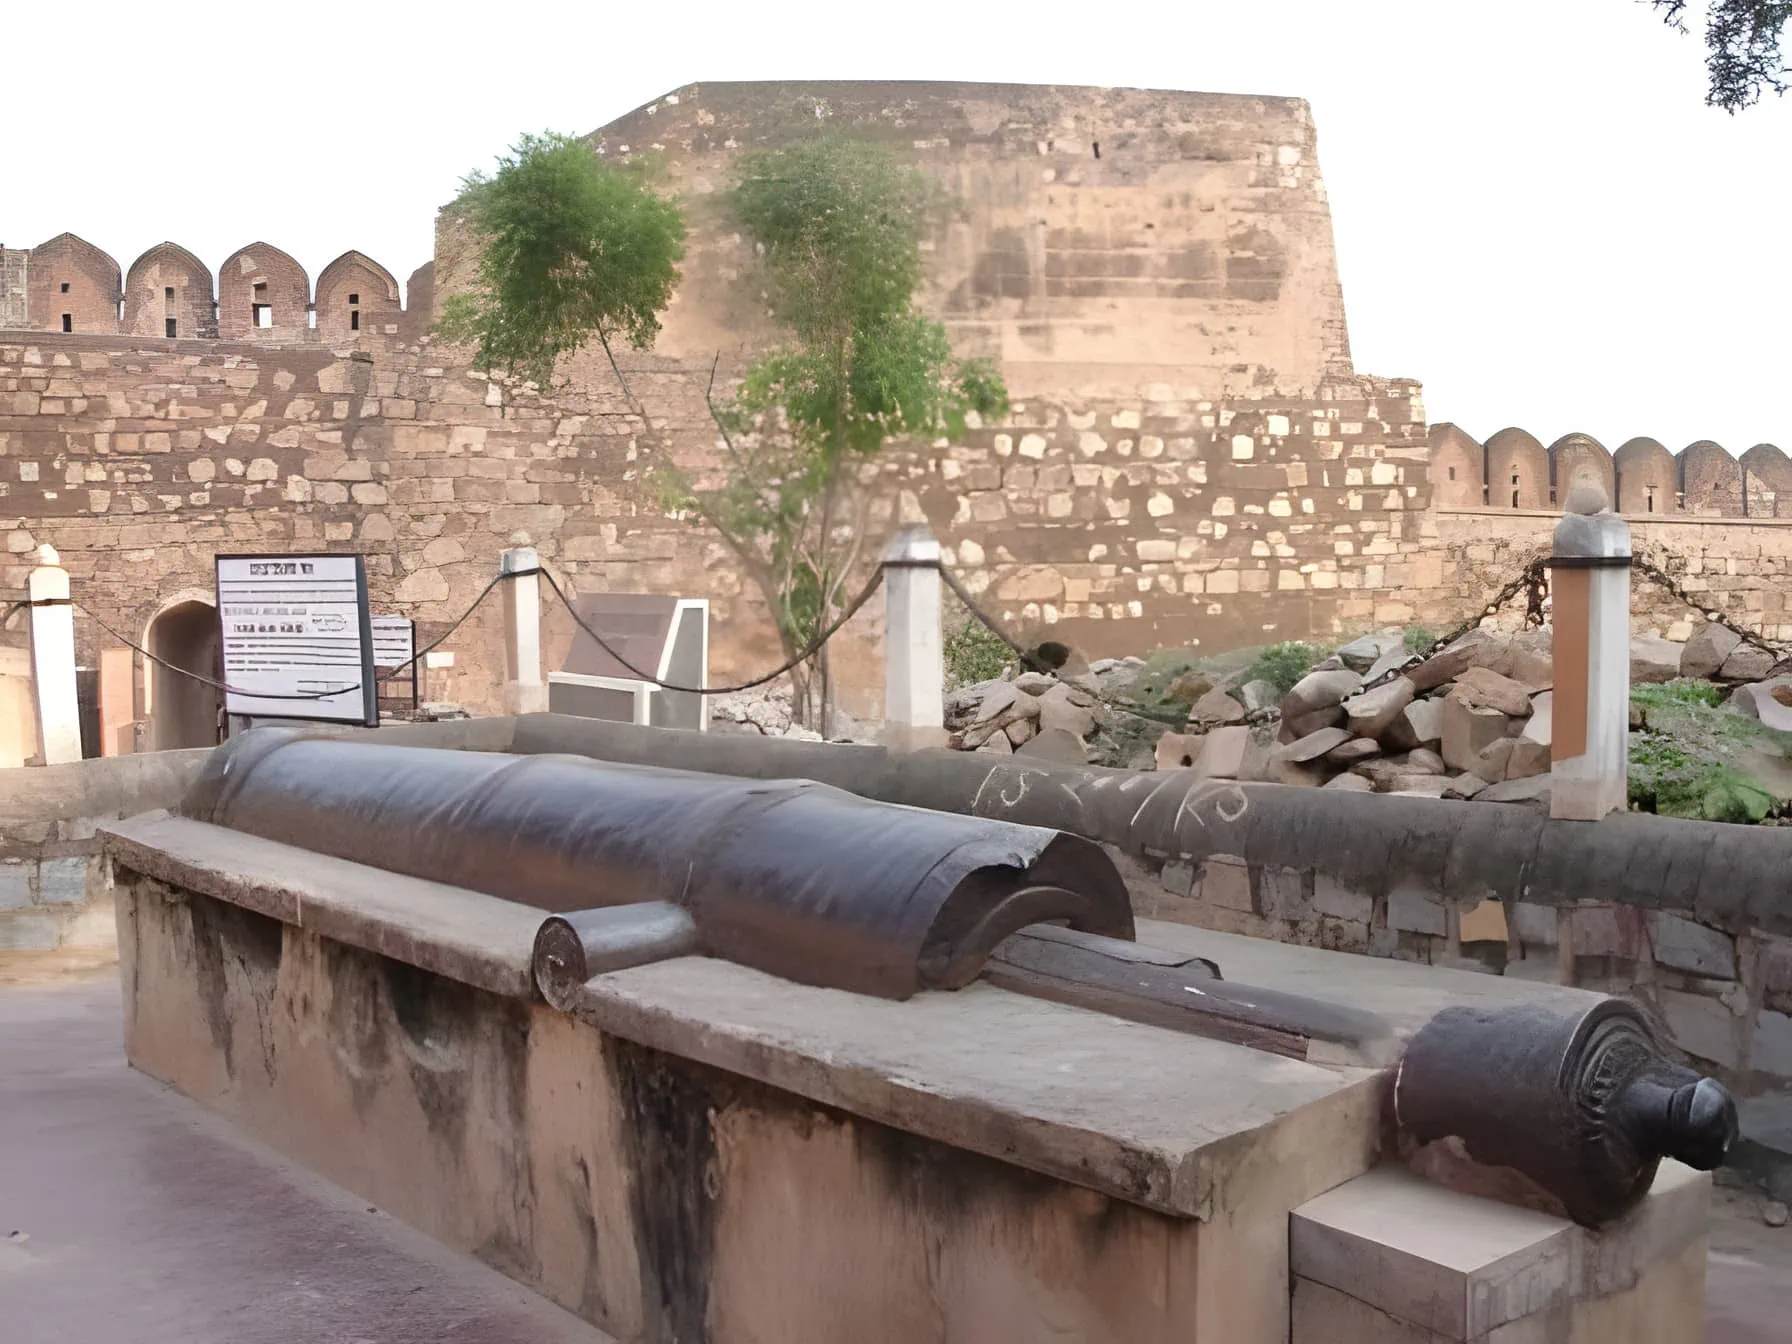 Cannon on Jhansi fort named as Kadak Bijli